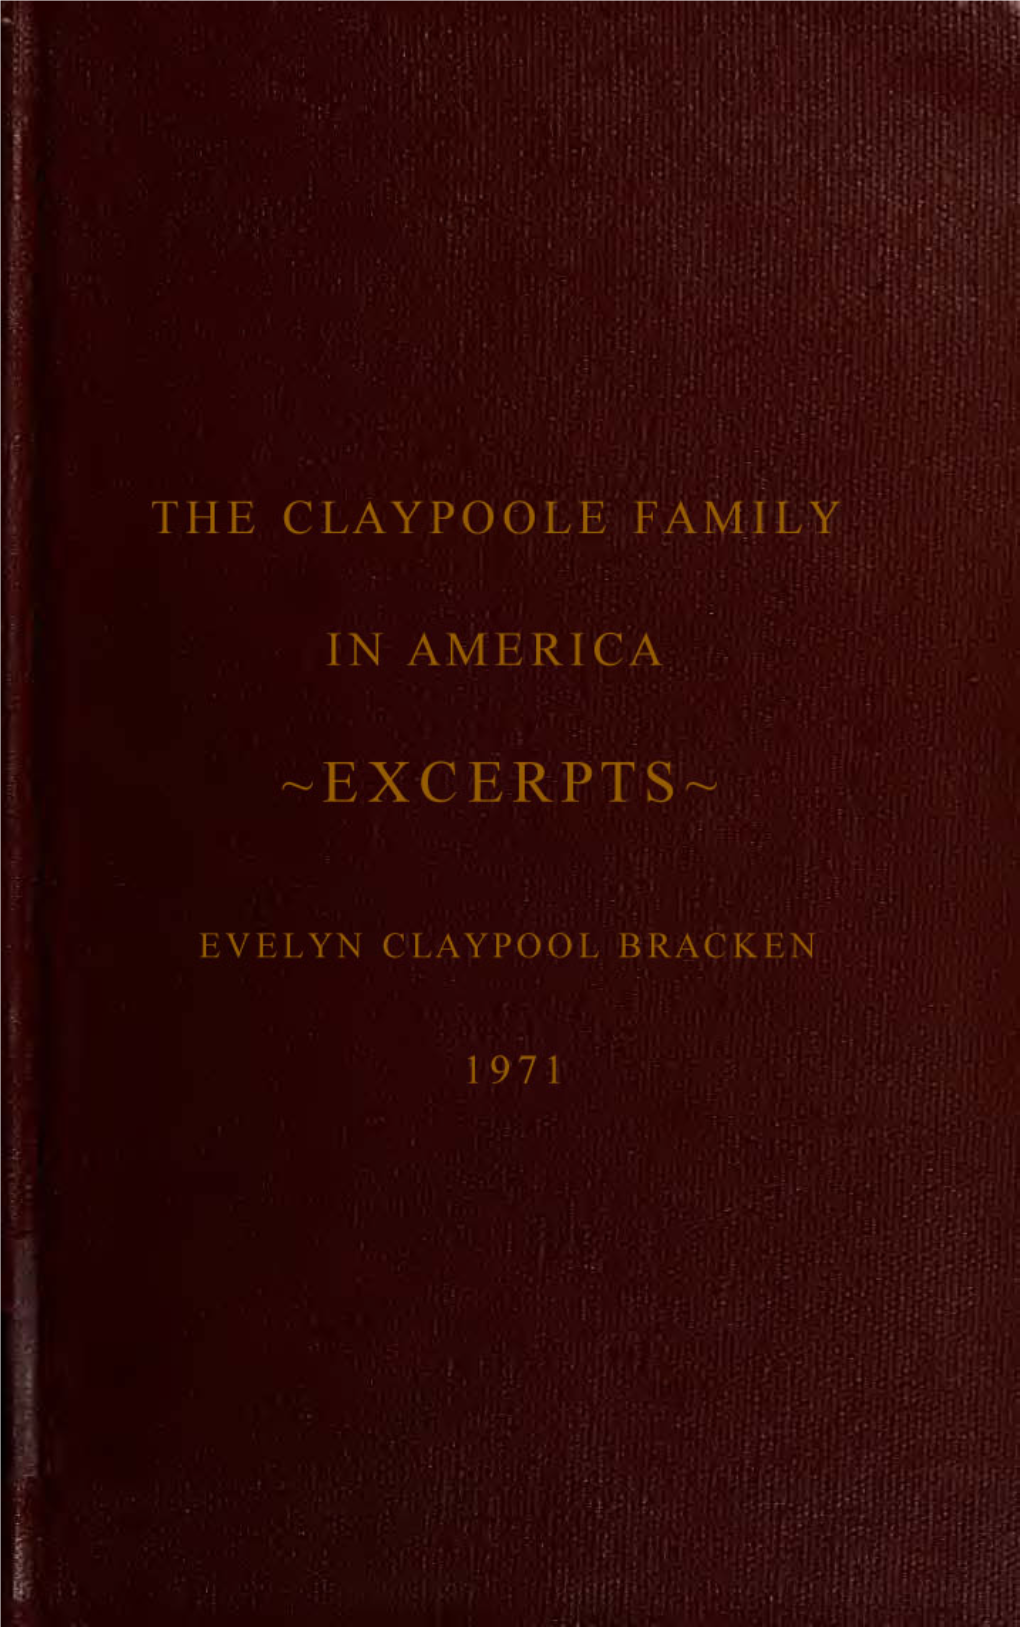 The Claypoole Family in America